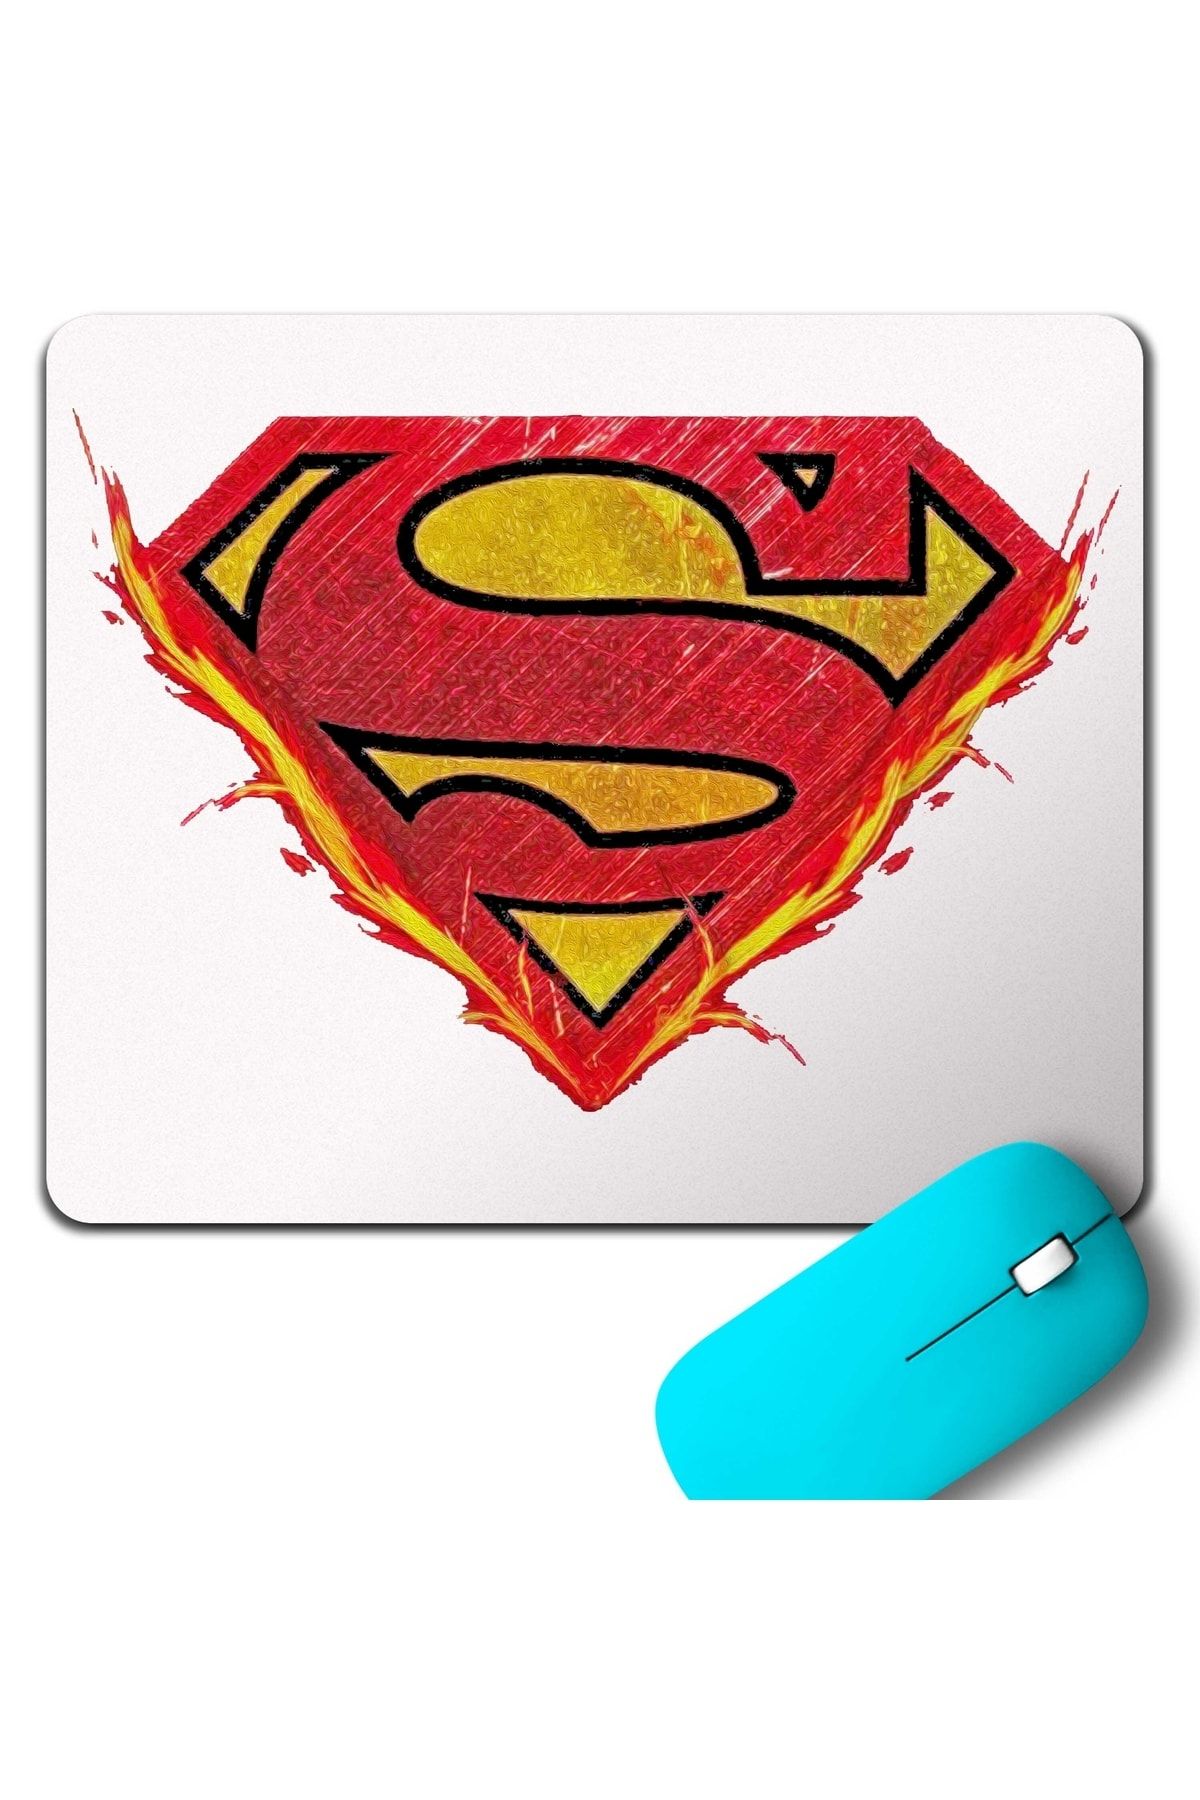 Kendim Seçtim Superman Flame Alev Logo Super Man Mouse Pad